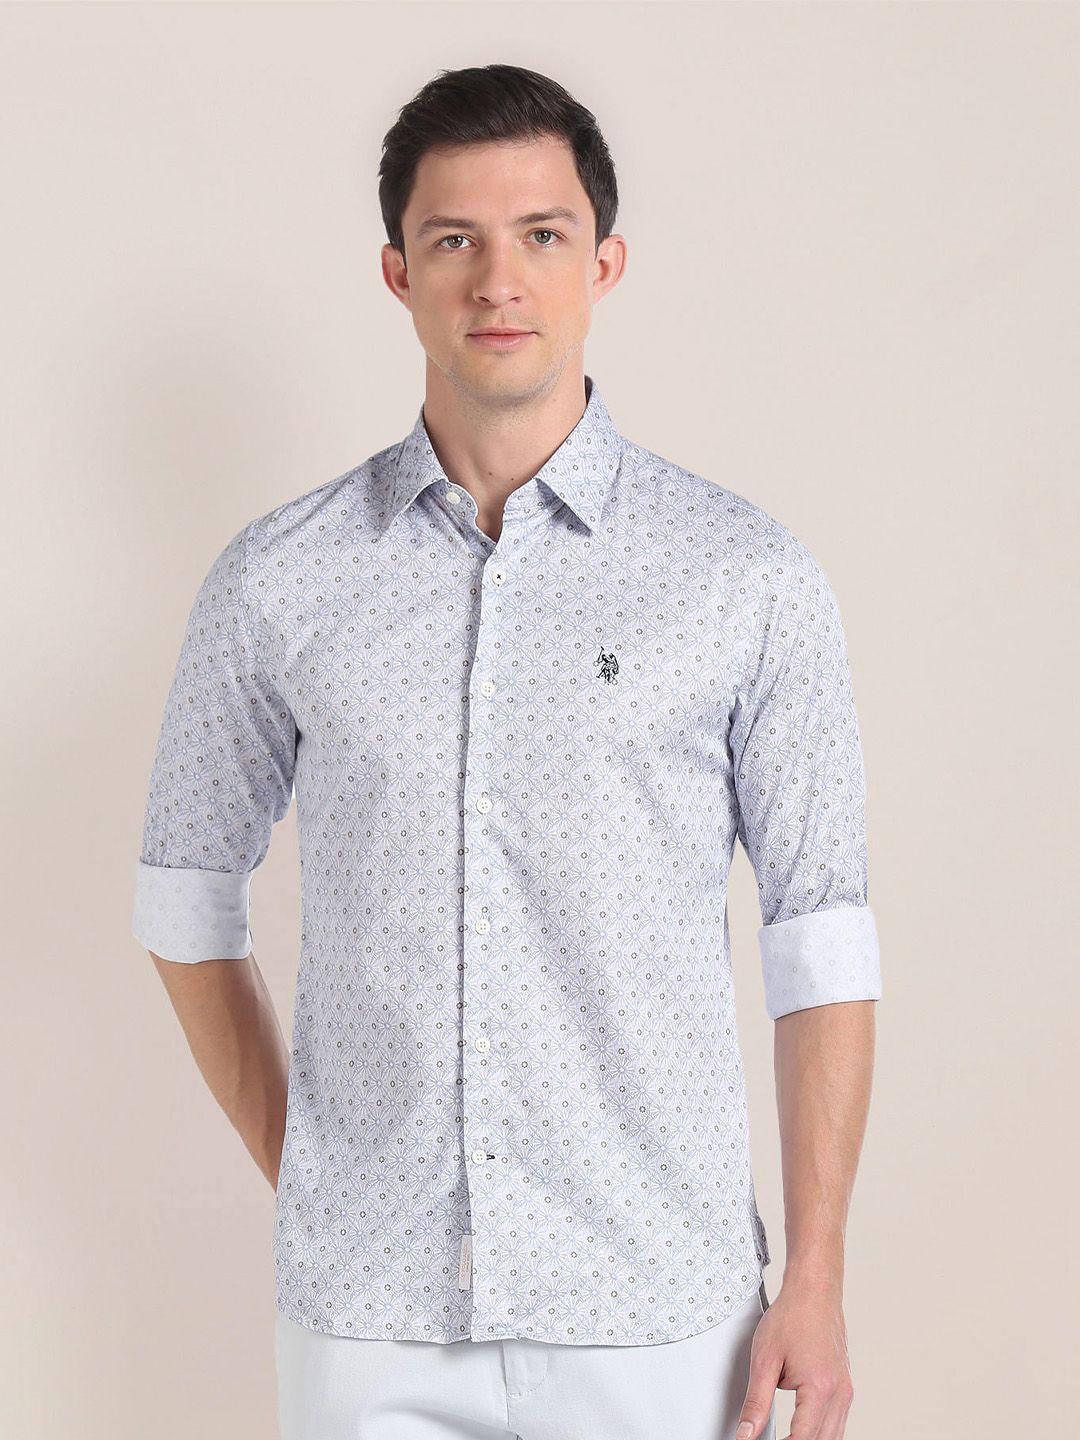 u.s. polo assn. ethnic motifs printed cotton casual shirt